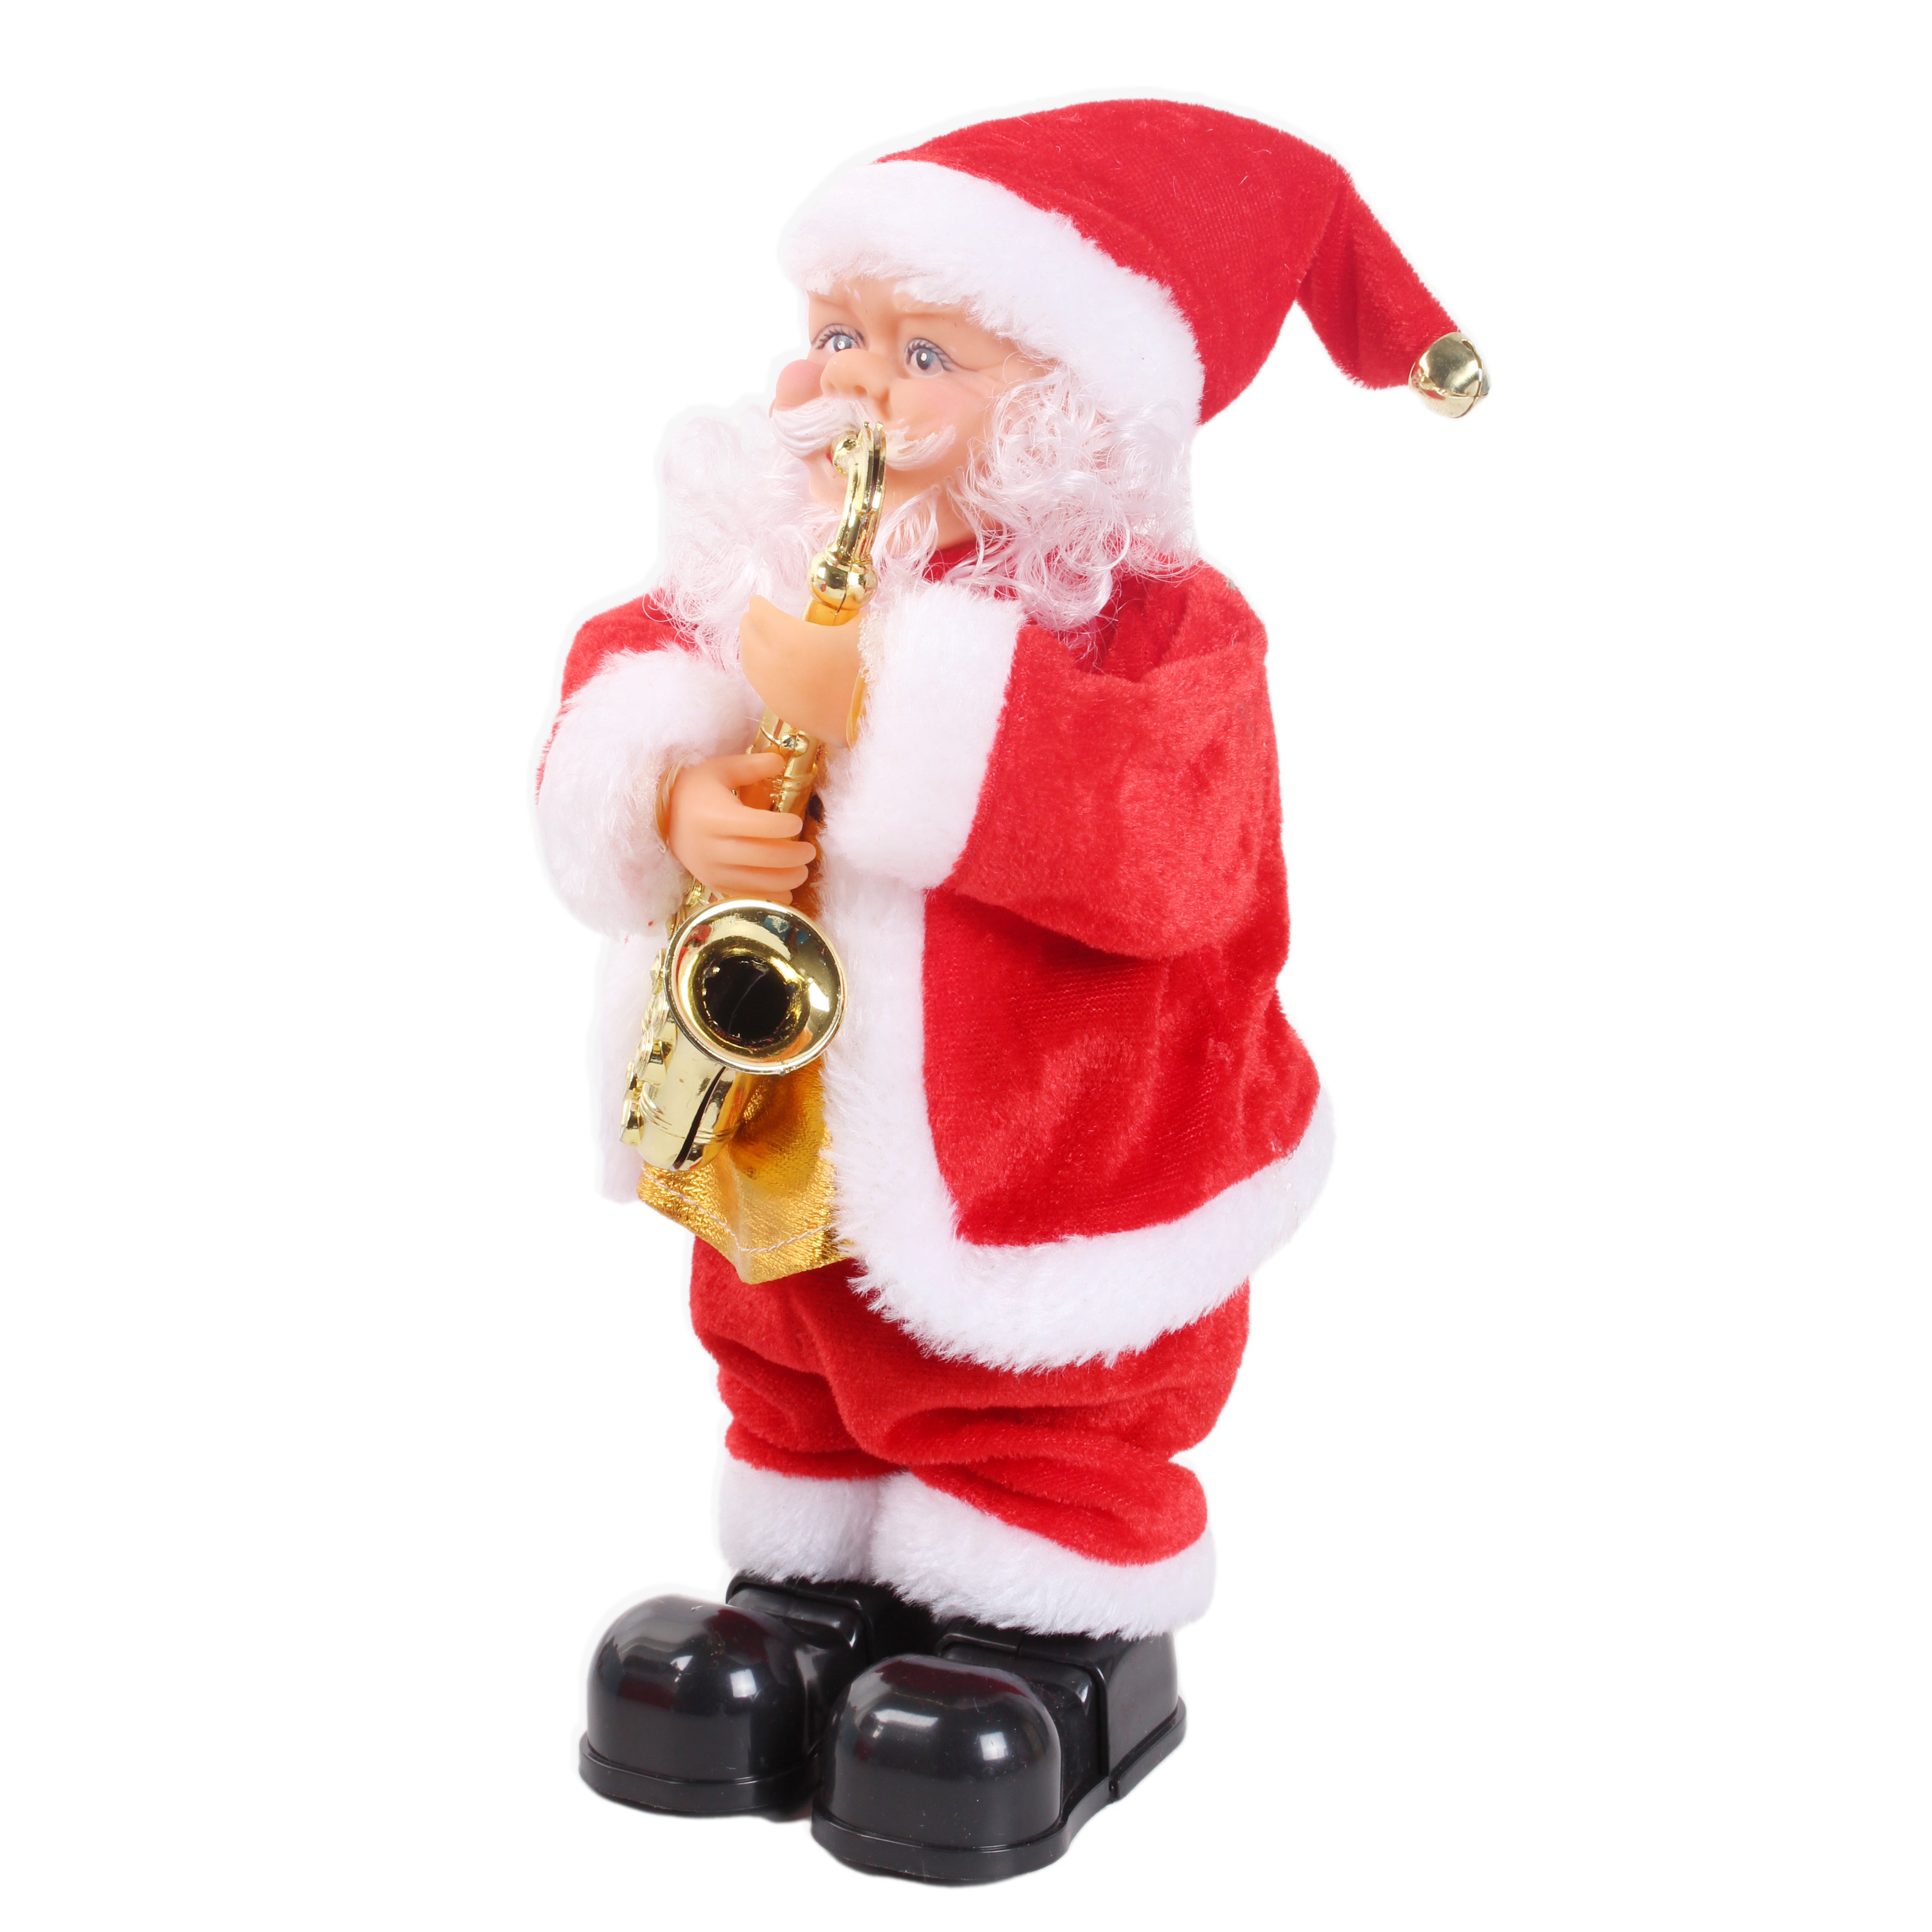 Christmas Toy Musical Moving Santa With Saxophone/Merry Christmas/Jingle Bells 10inch 1pc Box IB